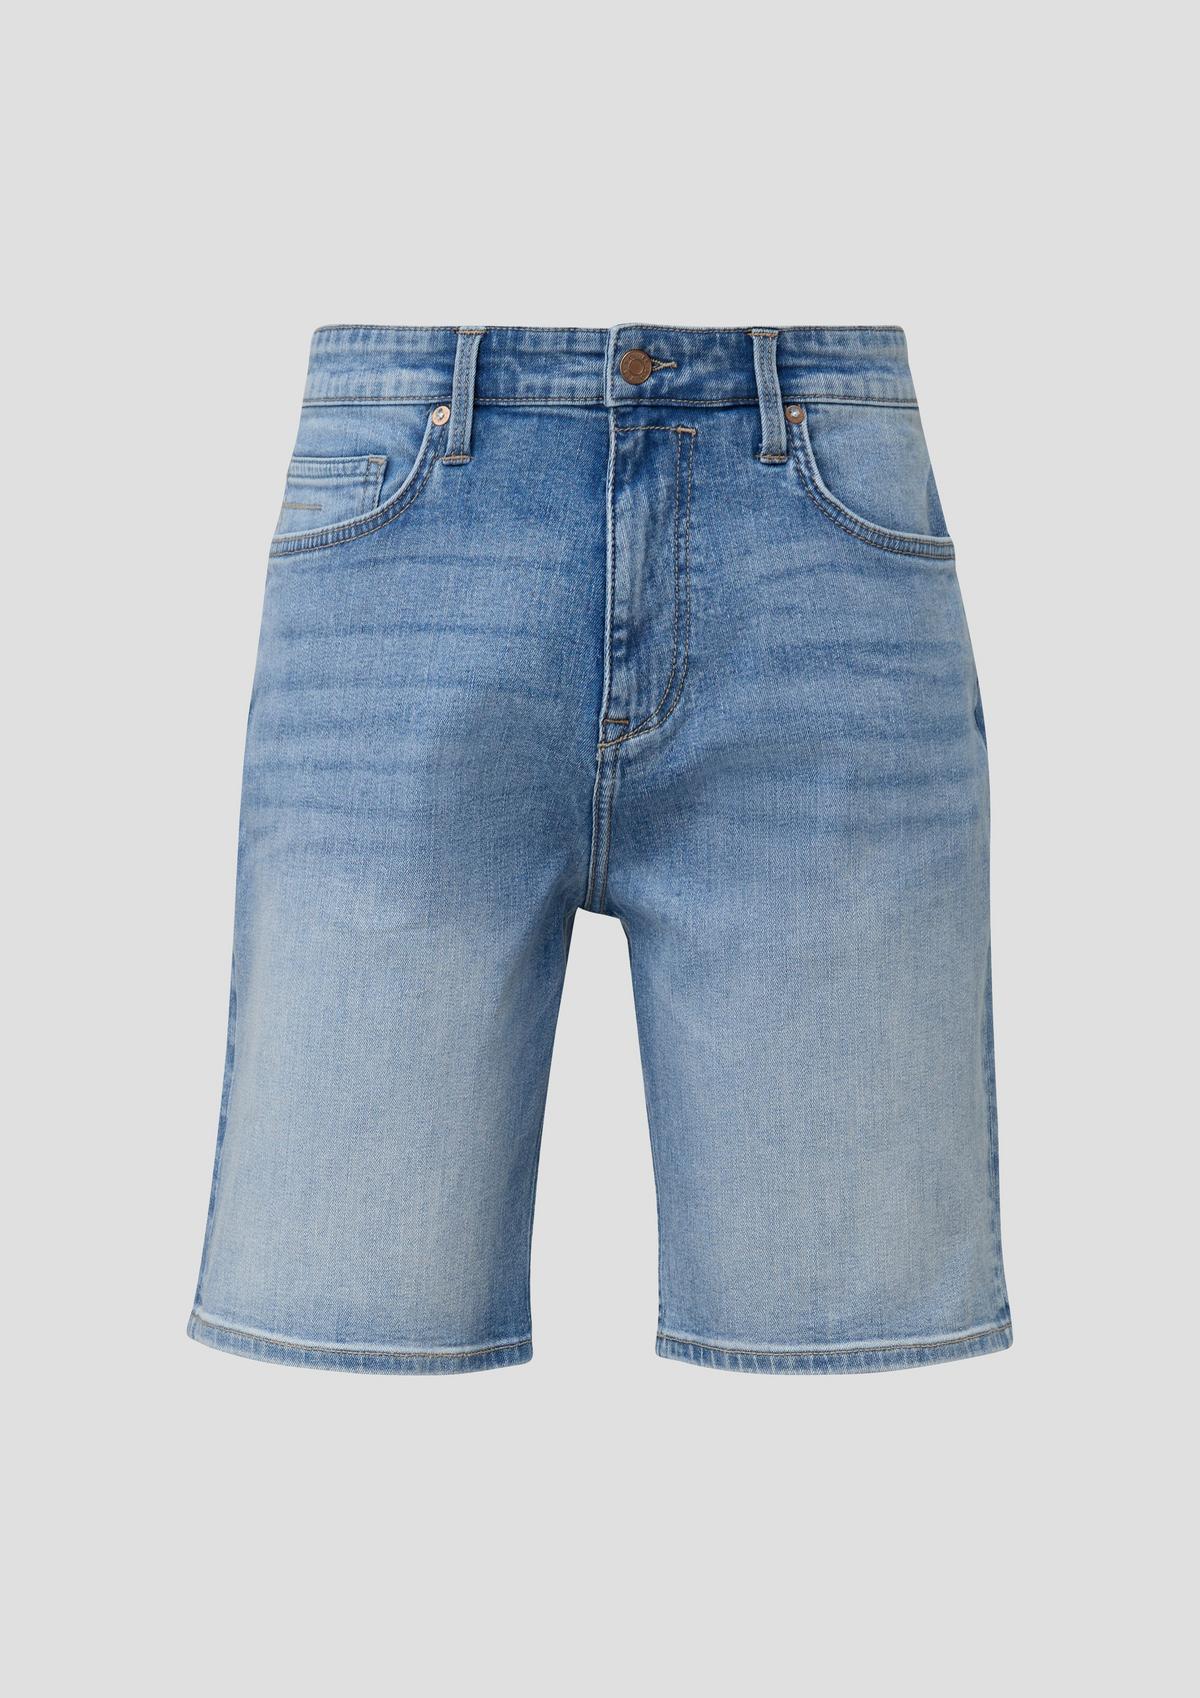 s.Oliver Short Jeans / Regular fit / Mid rise / Straight leg